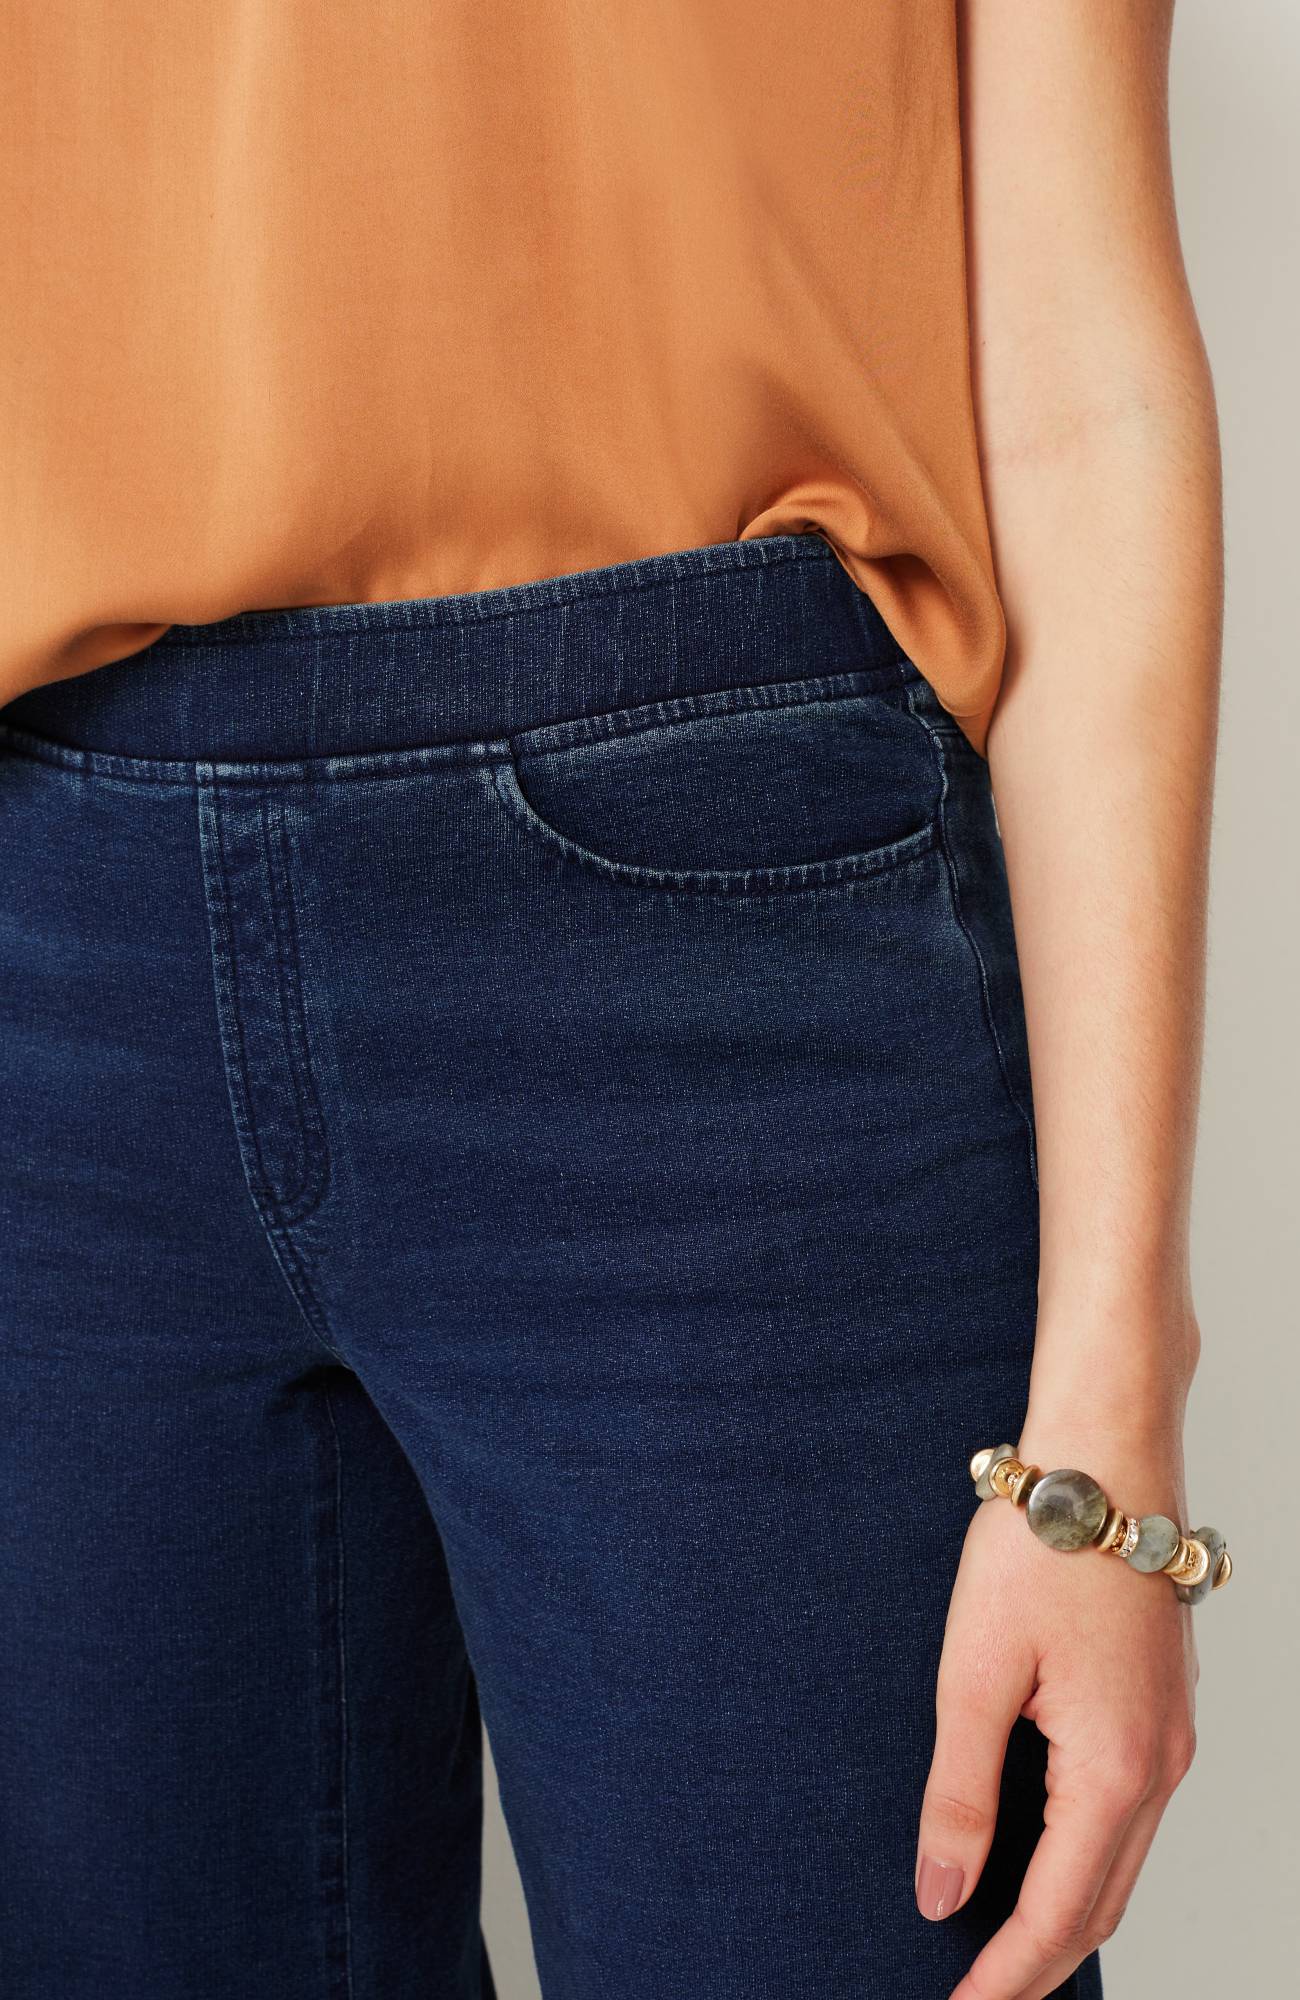 Pure Jill 5-Pocket Knit Wide-Leg Jeans